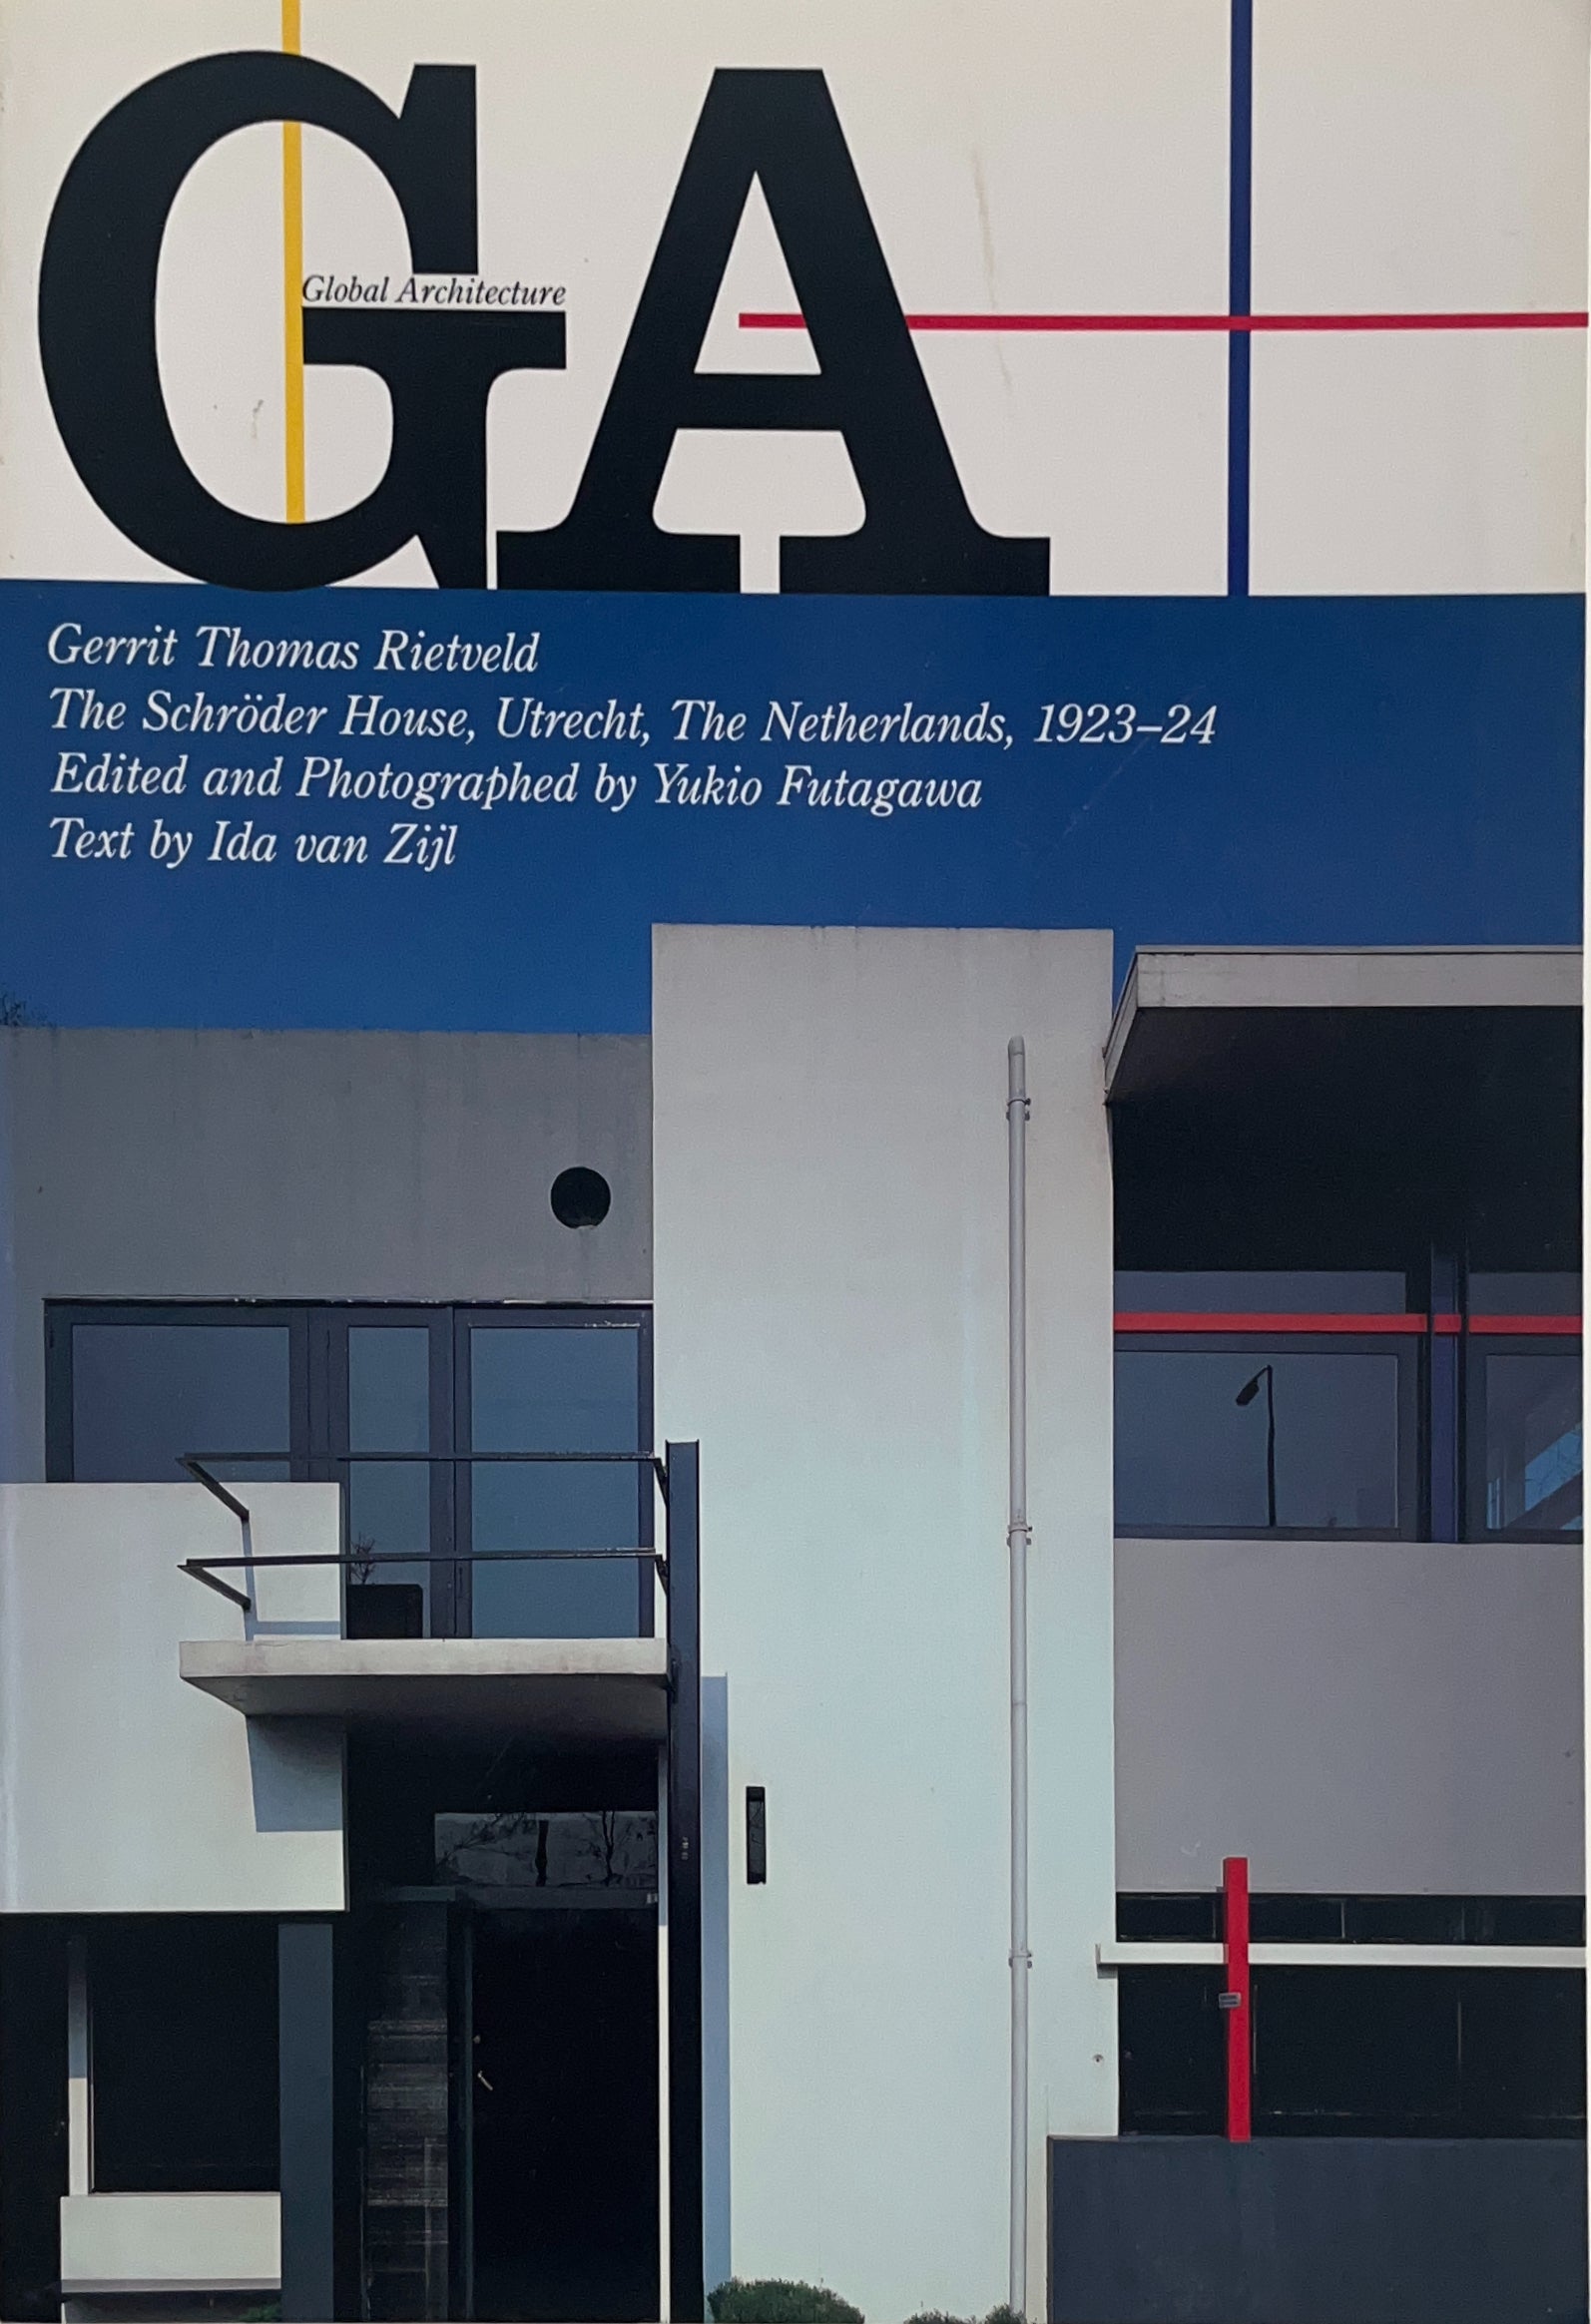 Global Architecture - Gerrit Thomas Rietveld